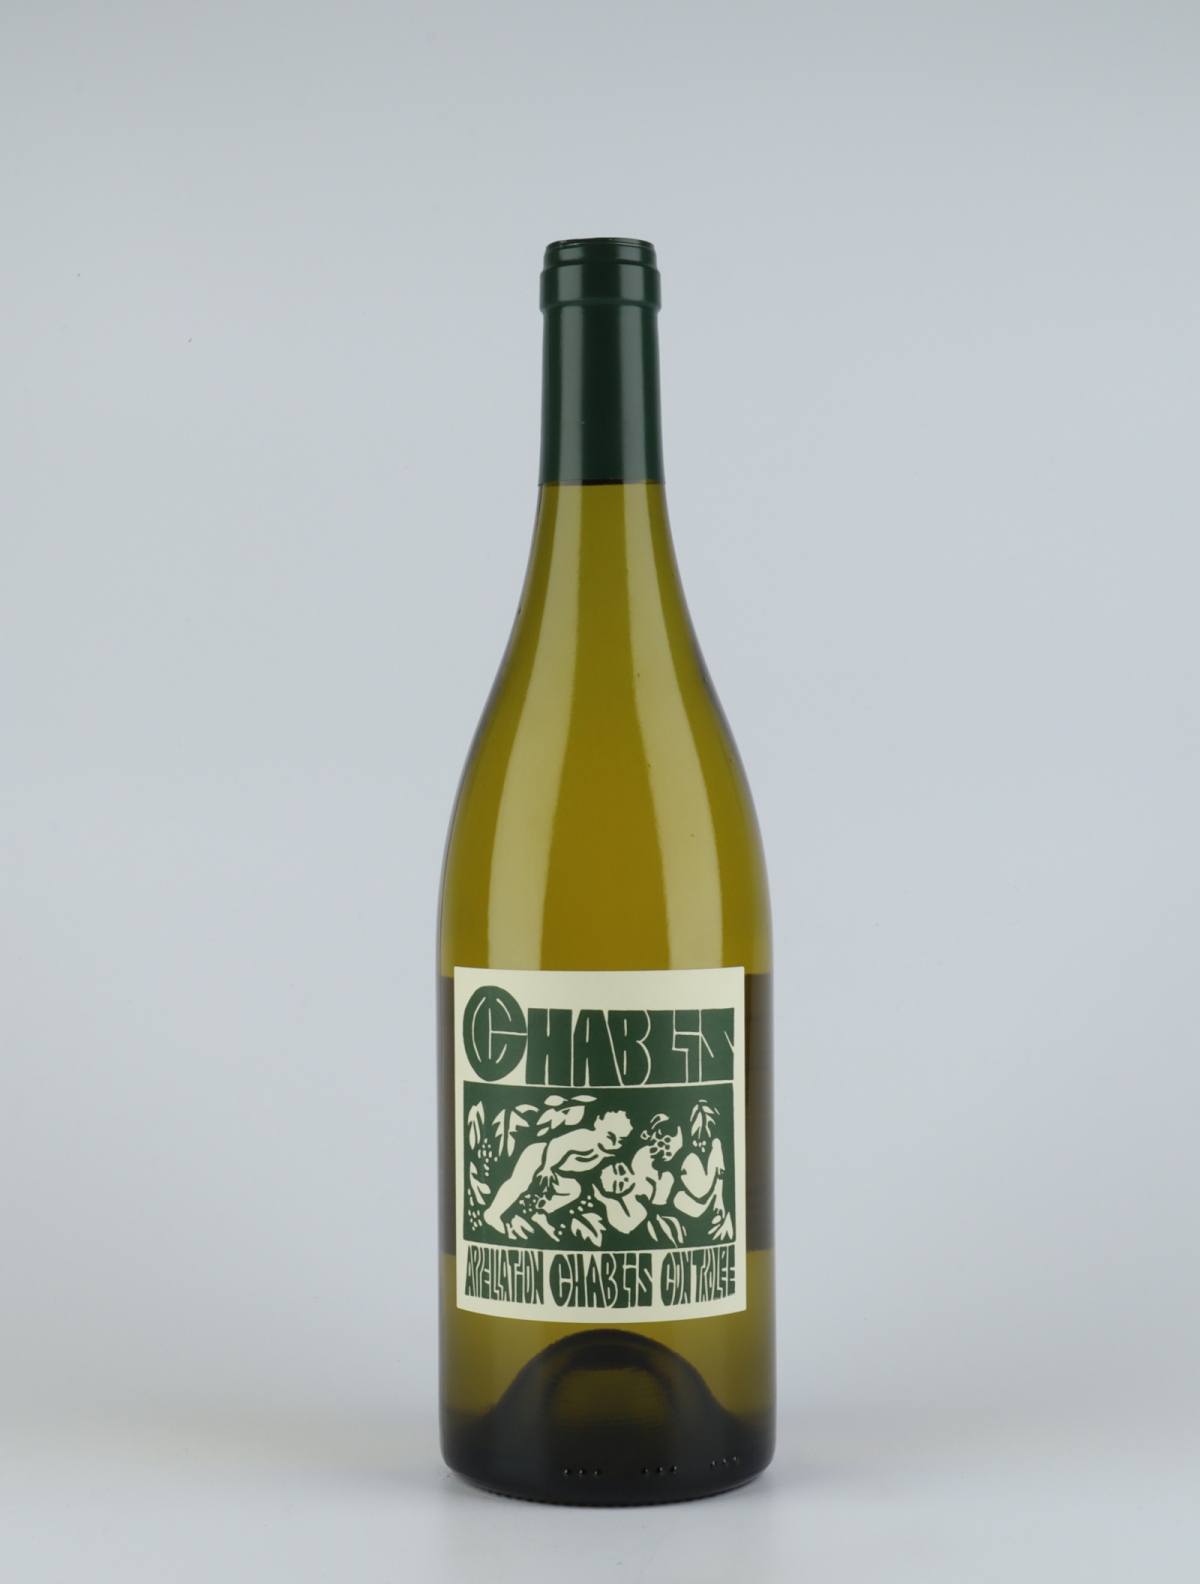 A bottle 2019 Chablis White wine from La Sœur Cadette, Burgundy in France